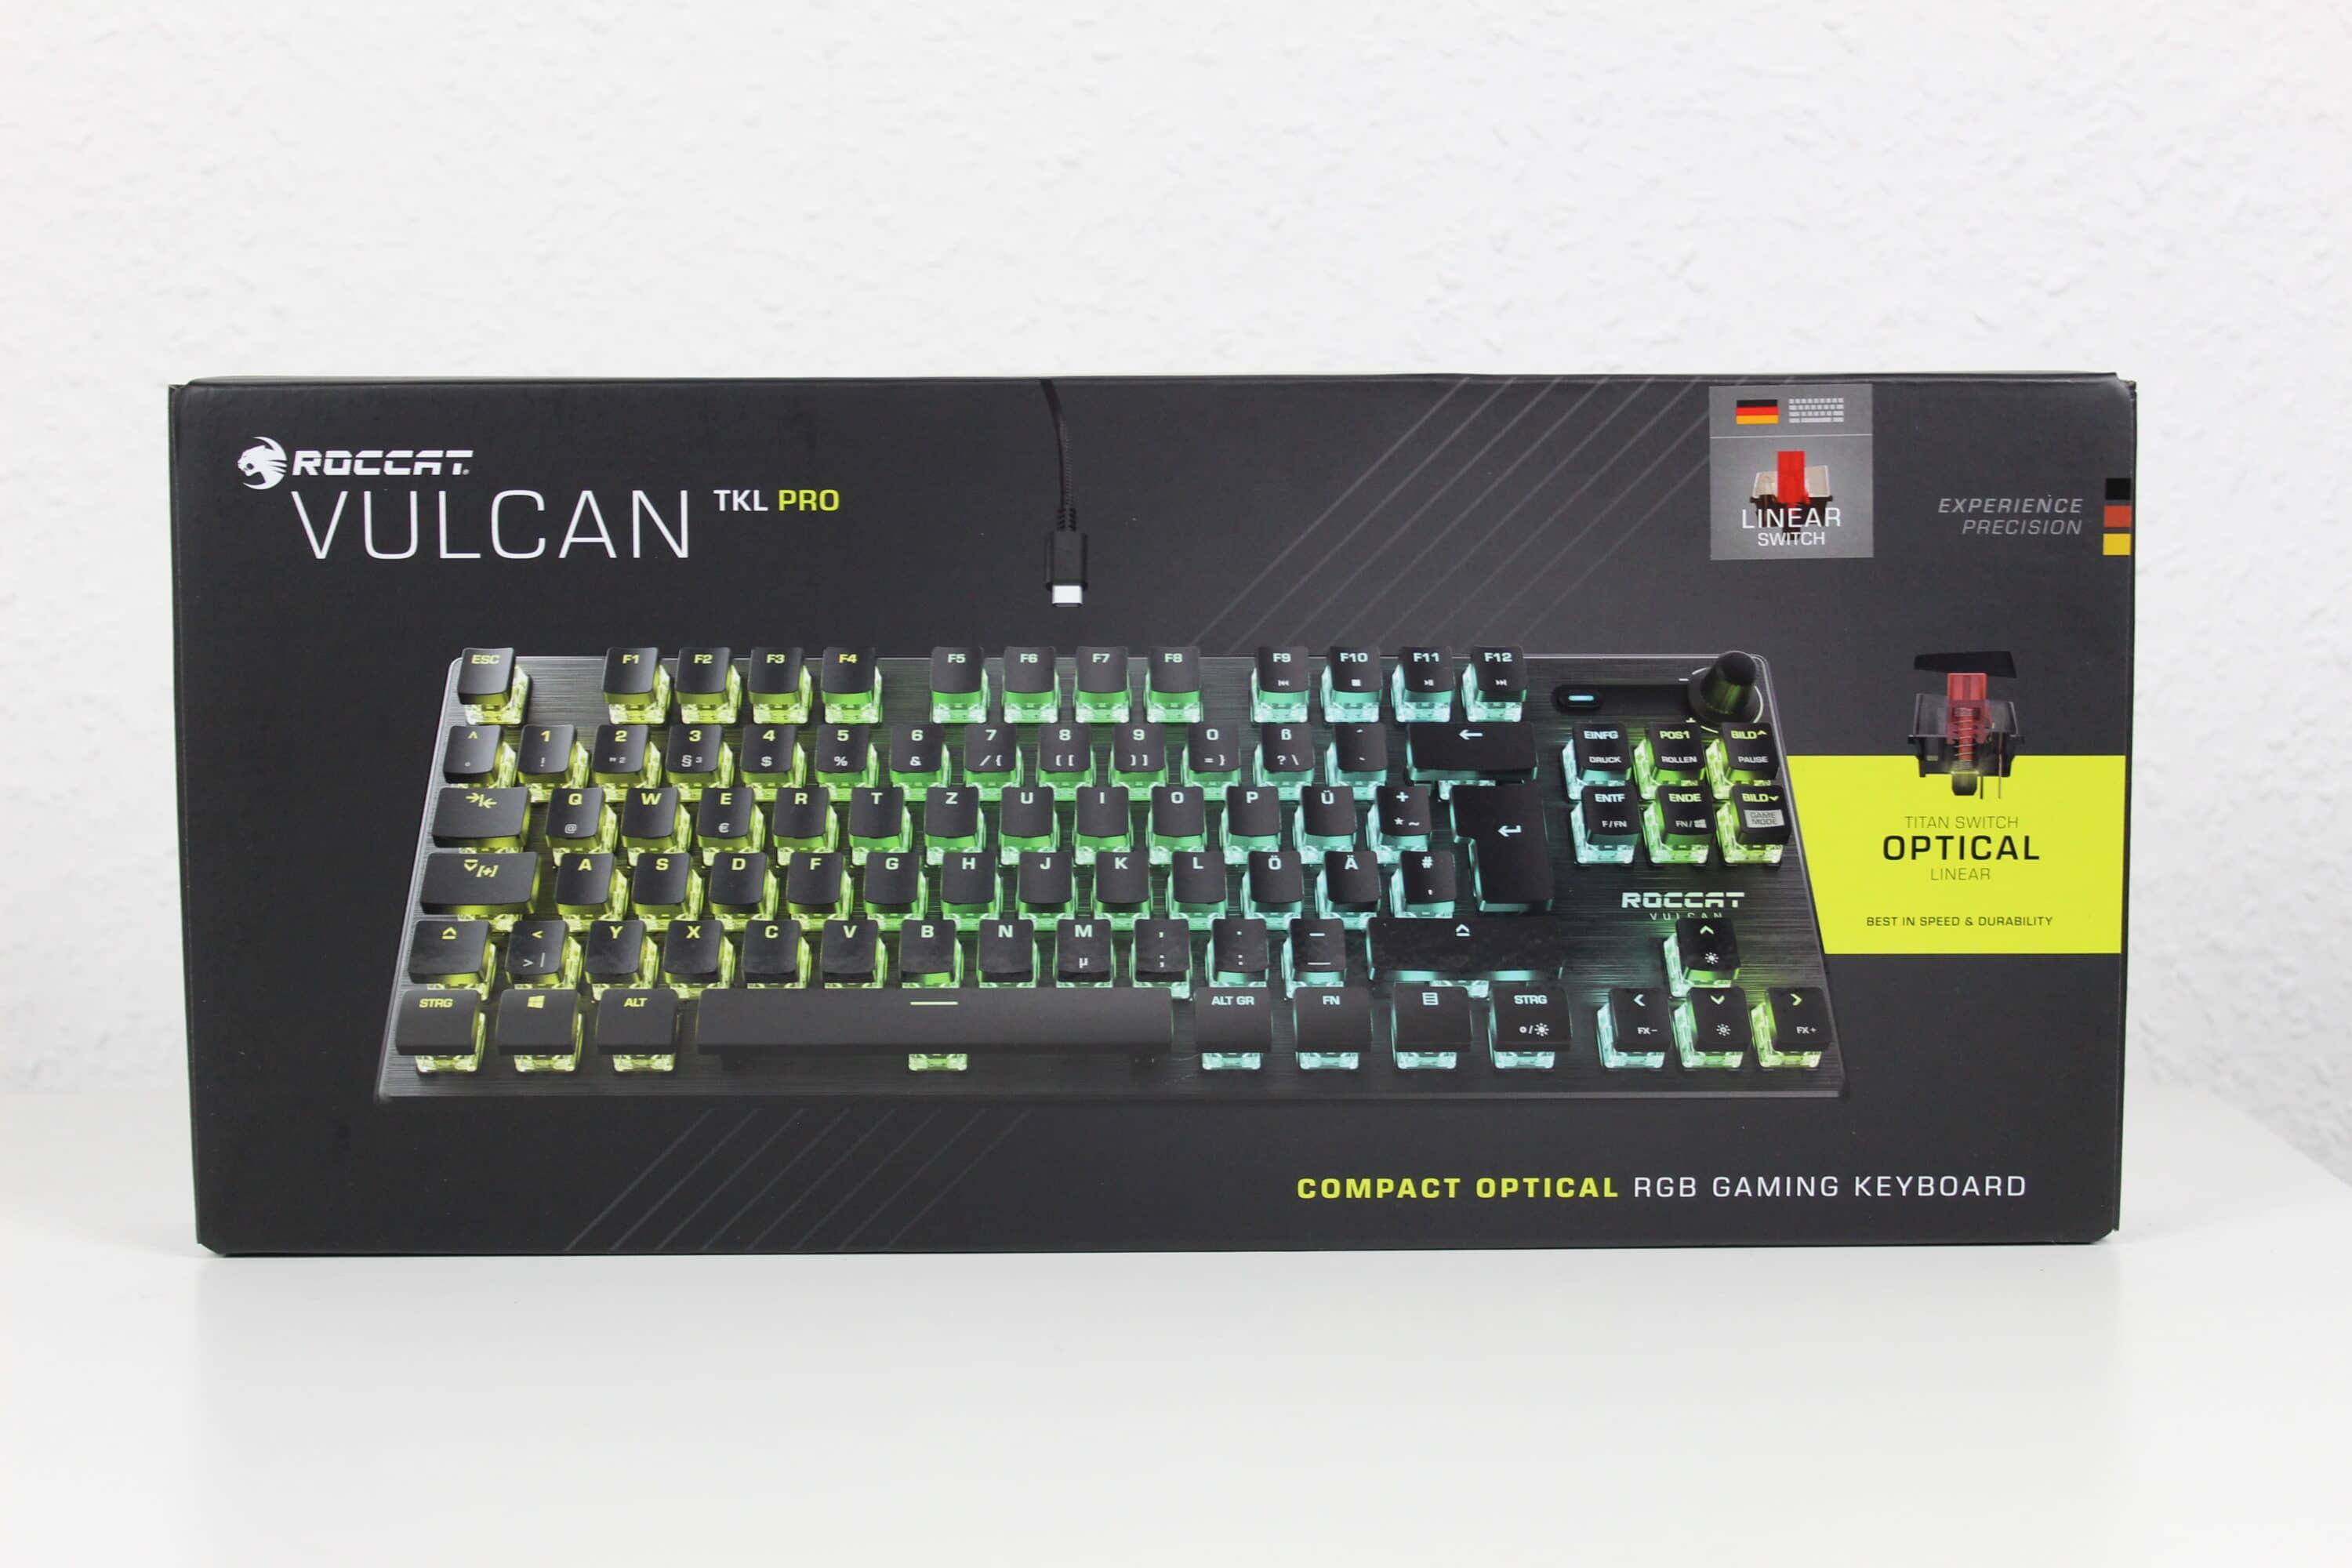 ROCCAT Vulcan TKL Pro - Small keyboard in perfection?